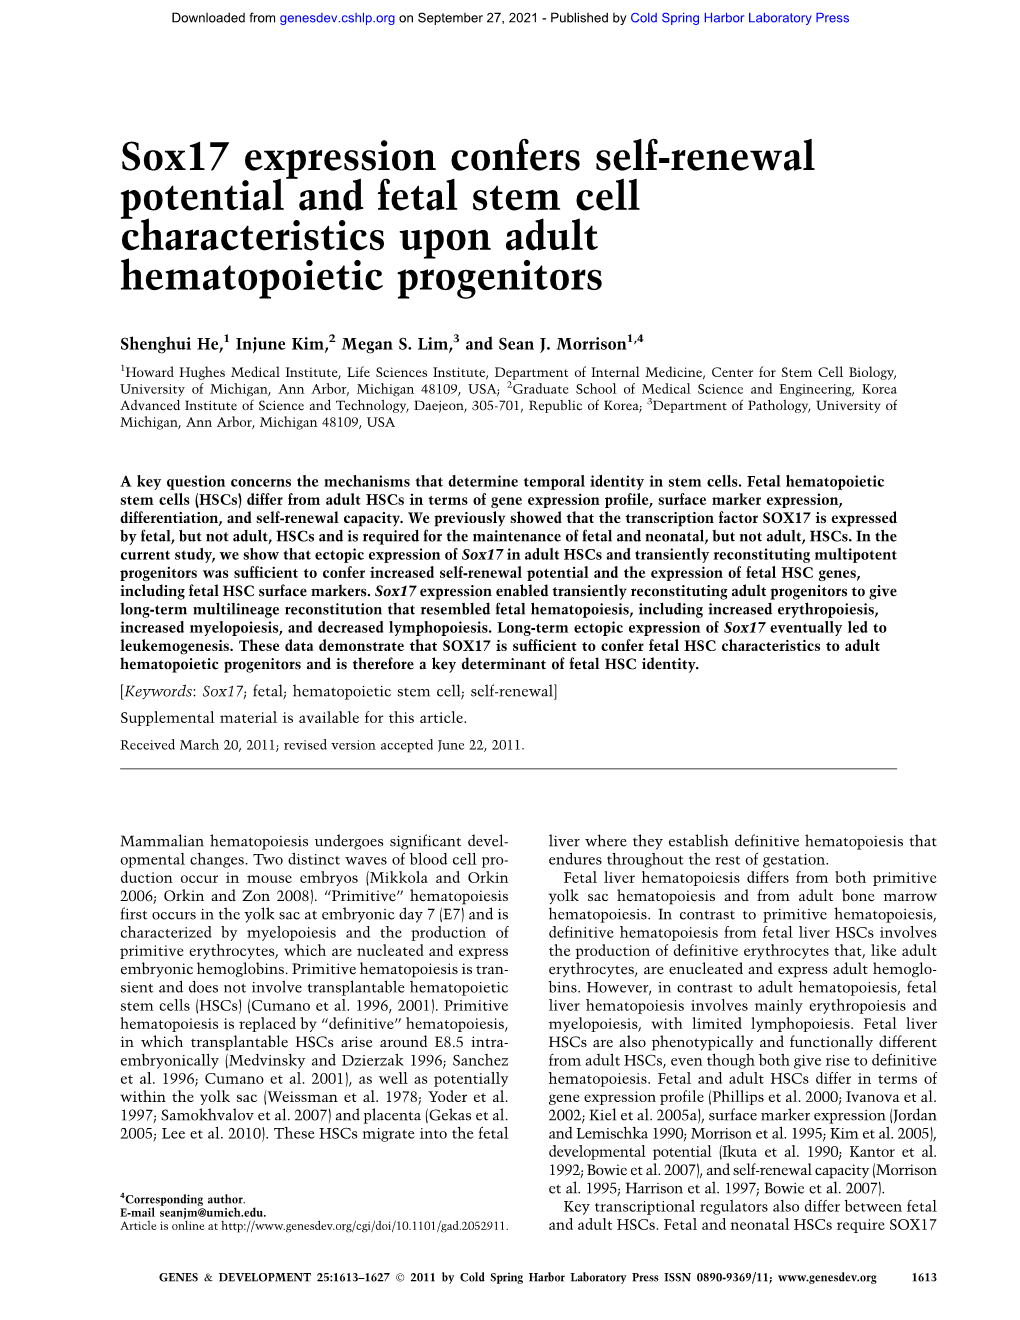 Sox17 Expression Confers Self-Renewal Potential and Fetal Stem Cell Characteristics Upon Adult Hematopoietic Progenitors